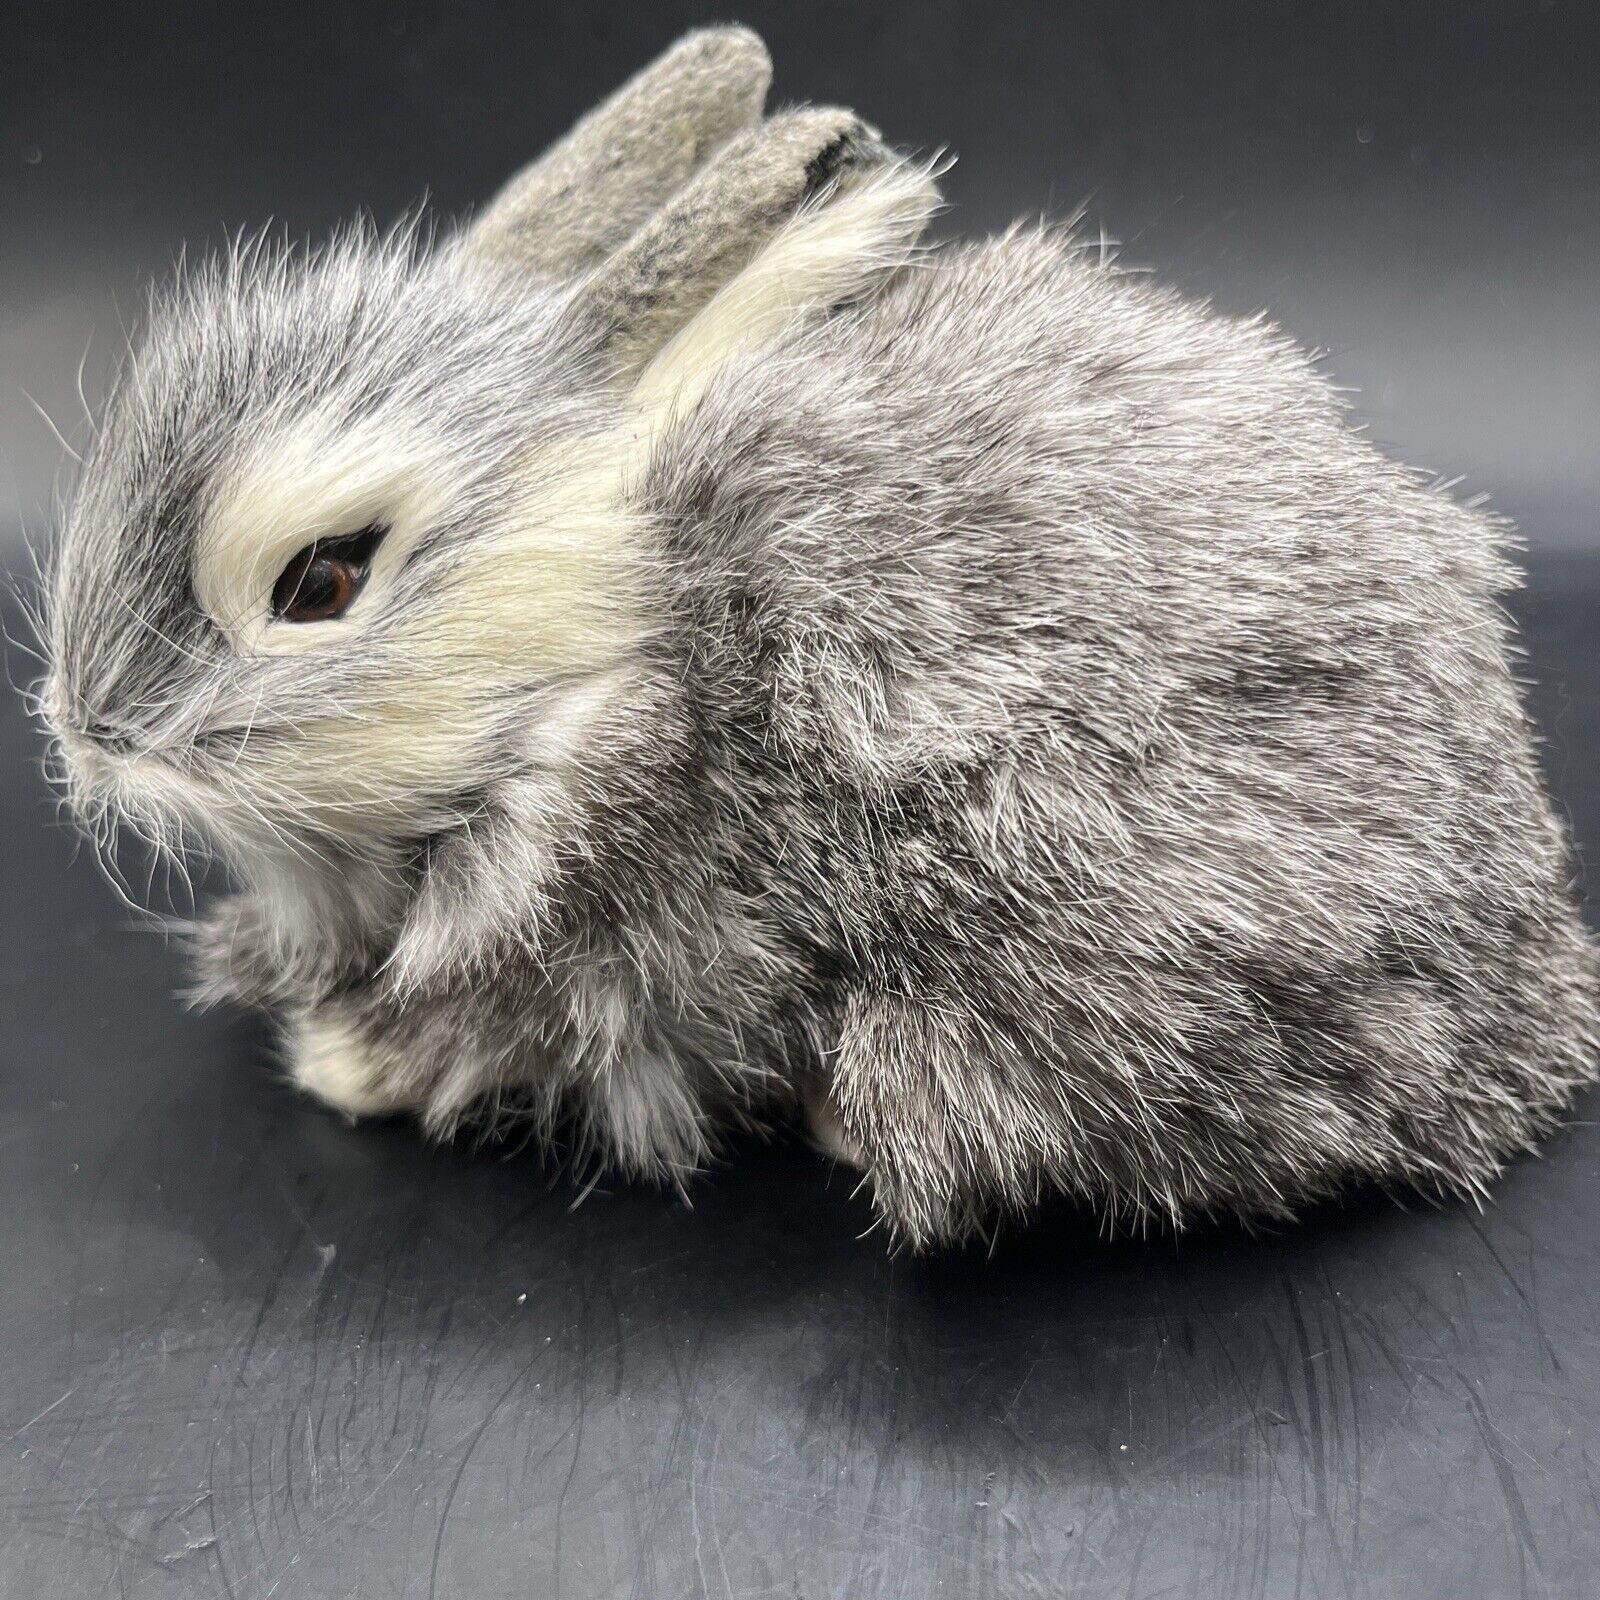 Life Like Bunny Figurine With Real Fur Rabbit Mini Looks Real 6” L 3.5” H